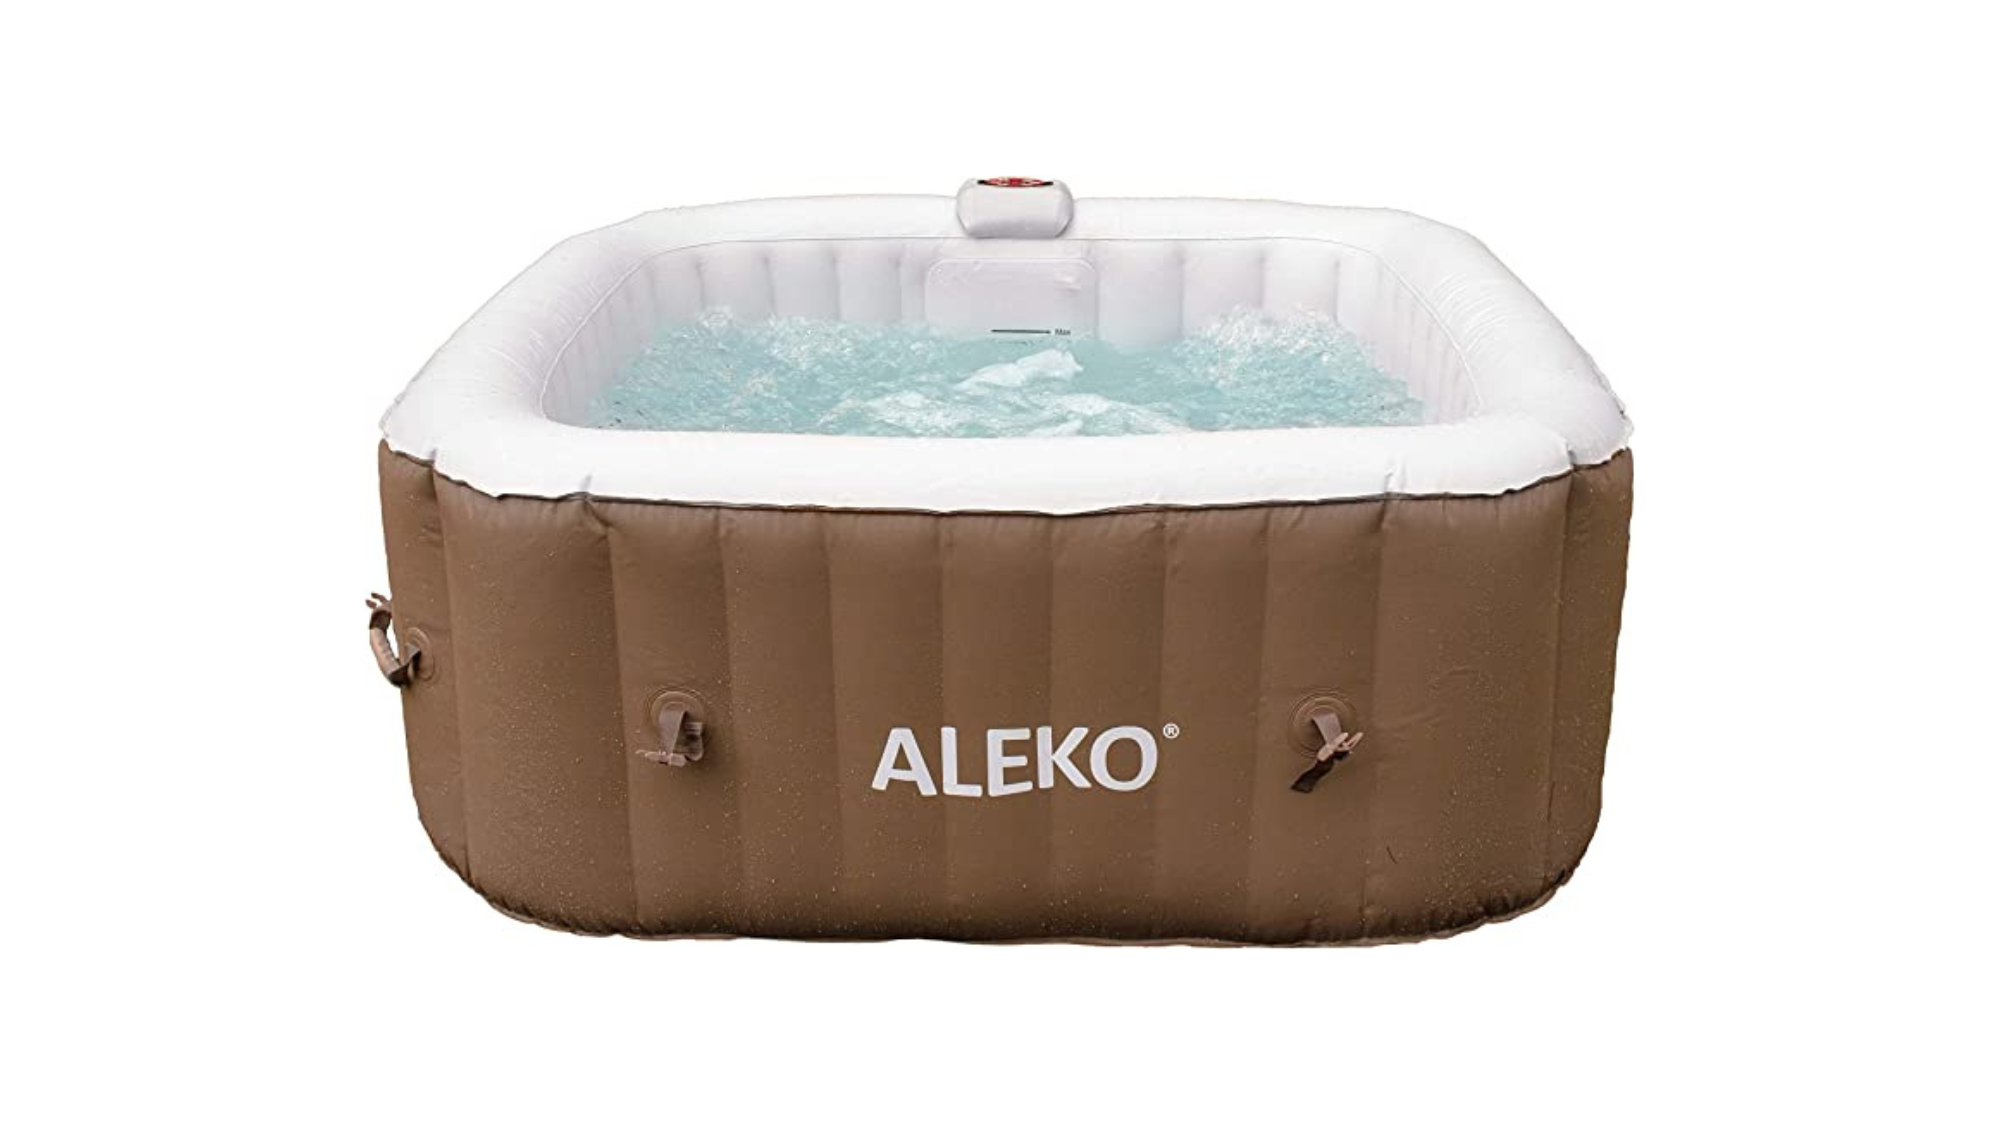 Brown Aleko 160 gallon inflatable PureSpa hot tub on white background